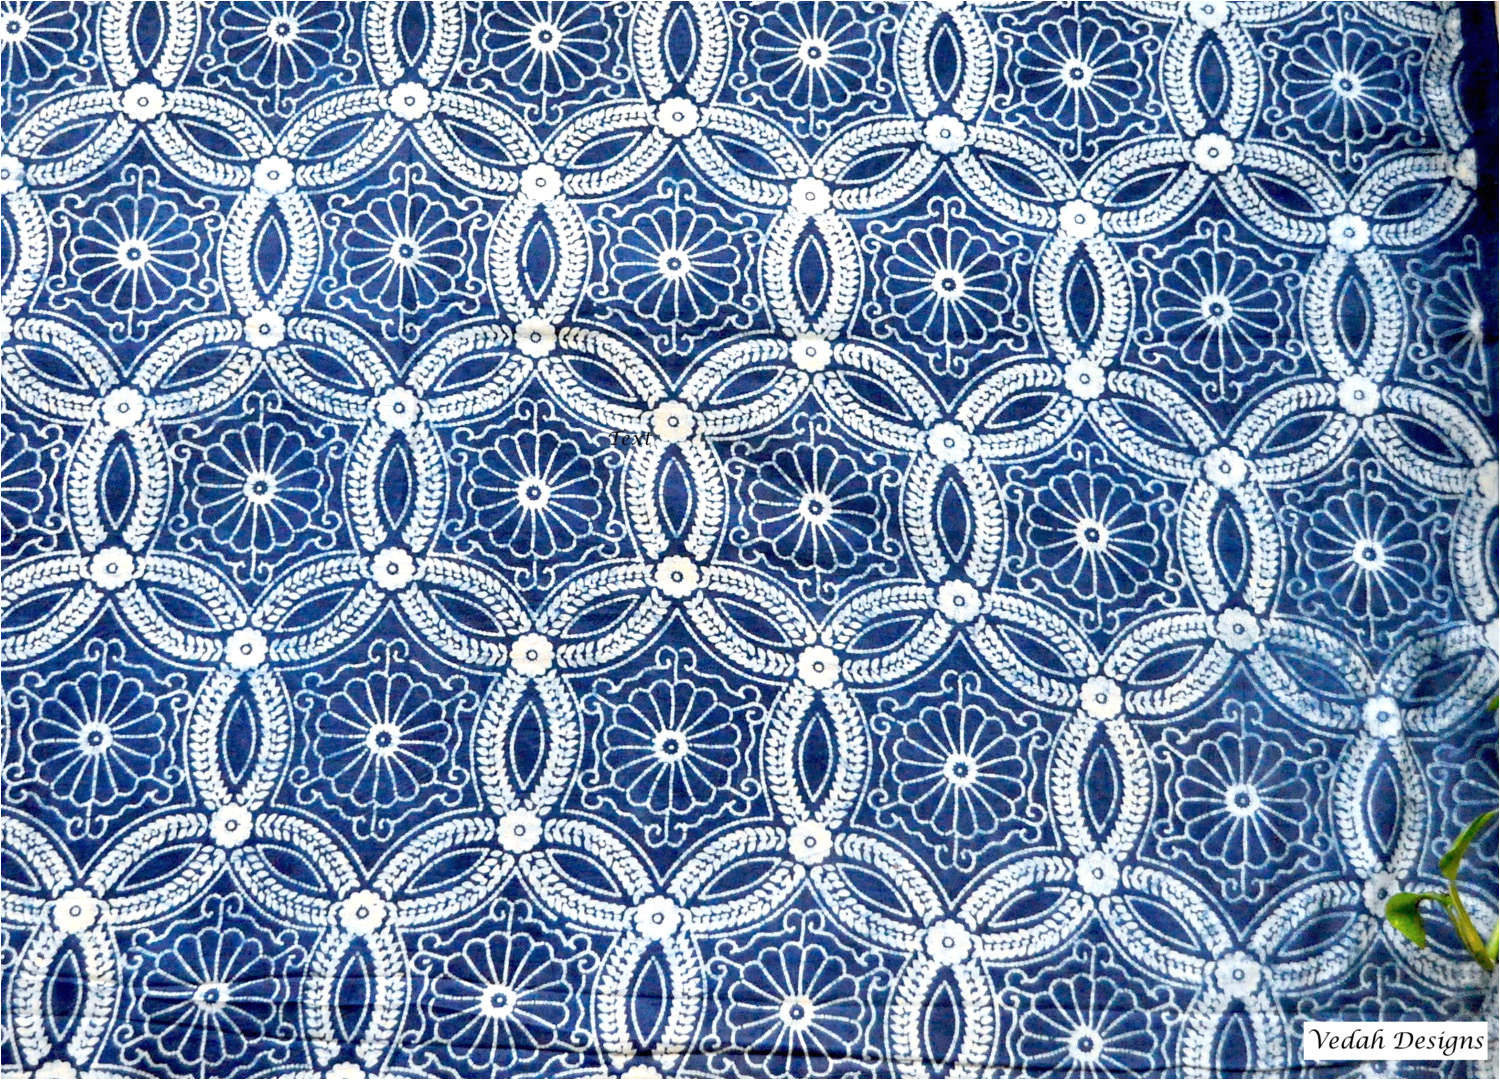 Indigo Mudcloth Fabric by the Yard Moroccan Design Indigo Fabric Mudcloth Block Print Fabric by Etsy